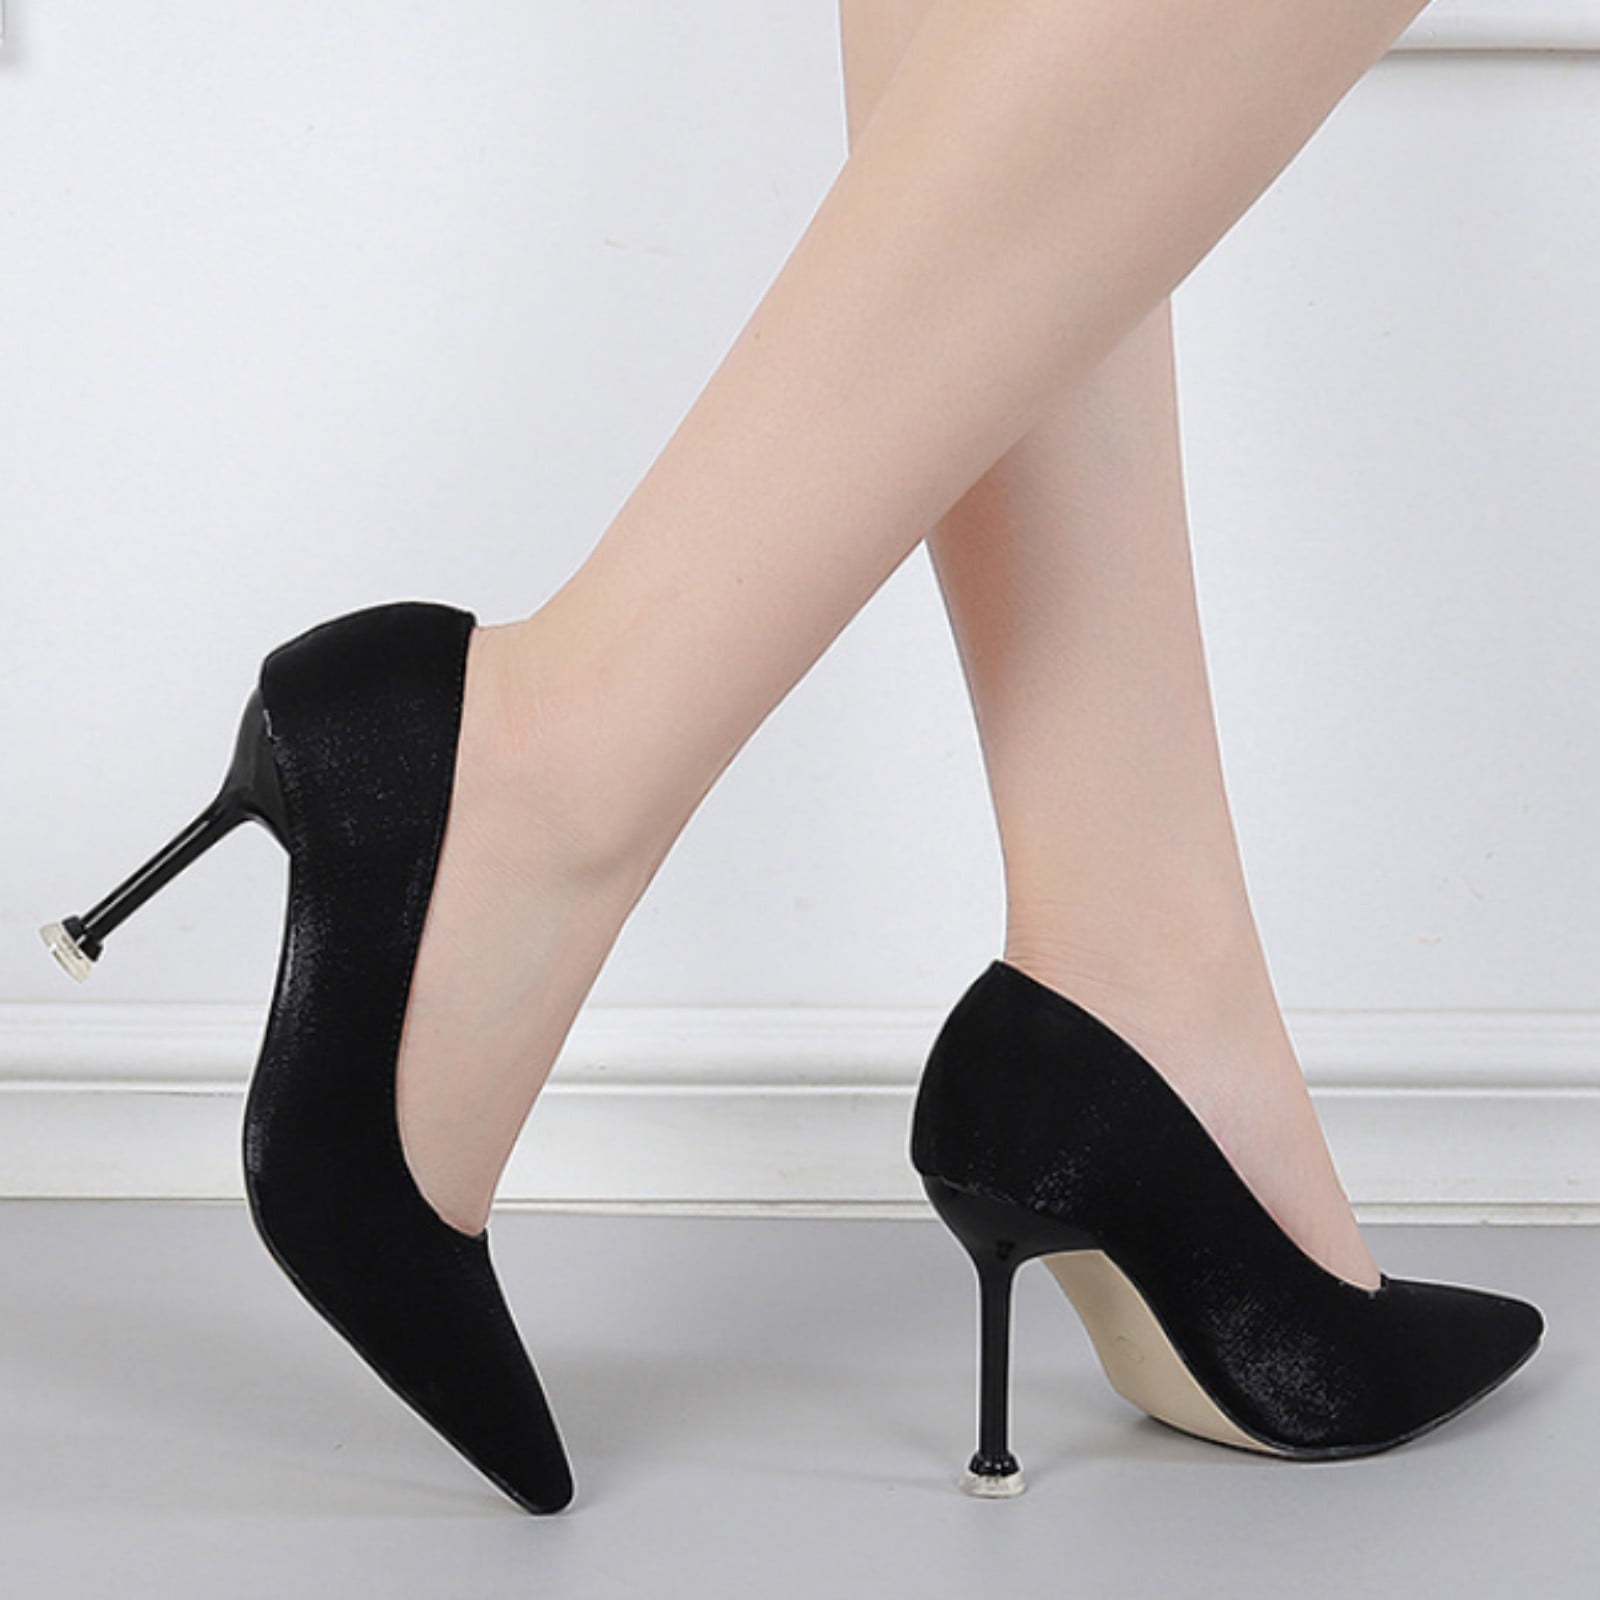 The Children's Place | Sandals heels, Girls shoes, Black sandals heels-thanhphatduhoc.com.vn